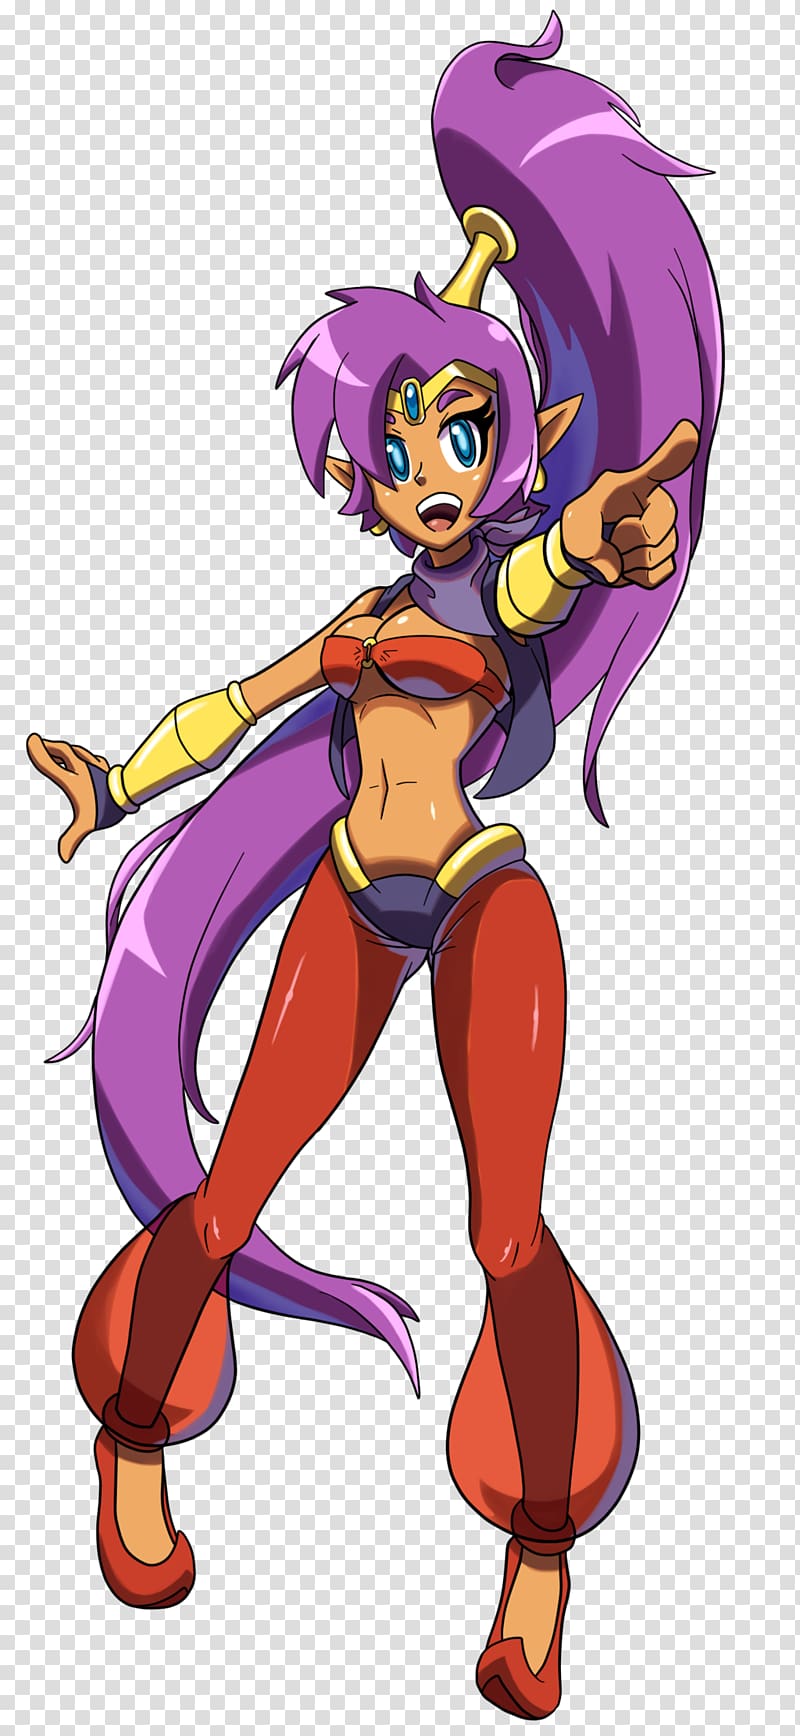 Shantae: Half-Genie Hero Anime TV Tropes Video game, shantae transparent background PNG clipart